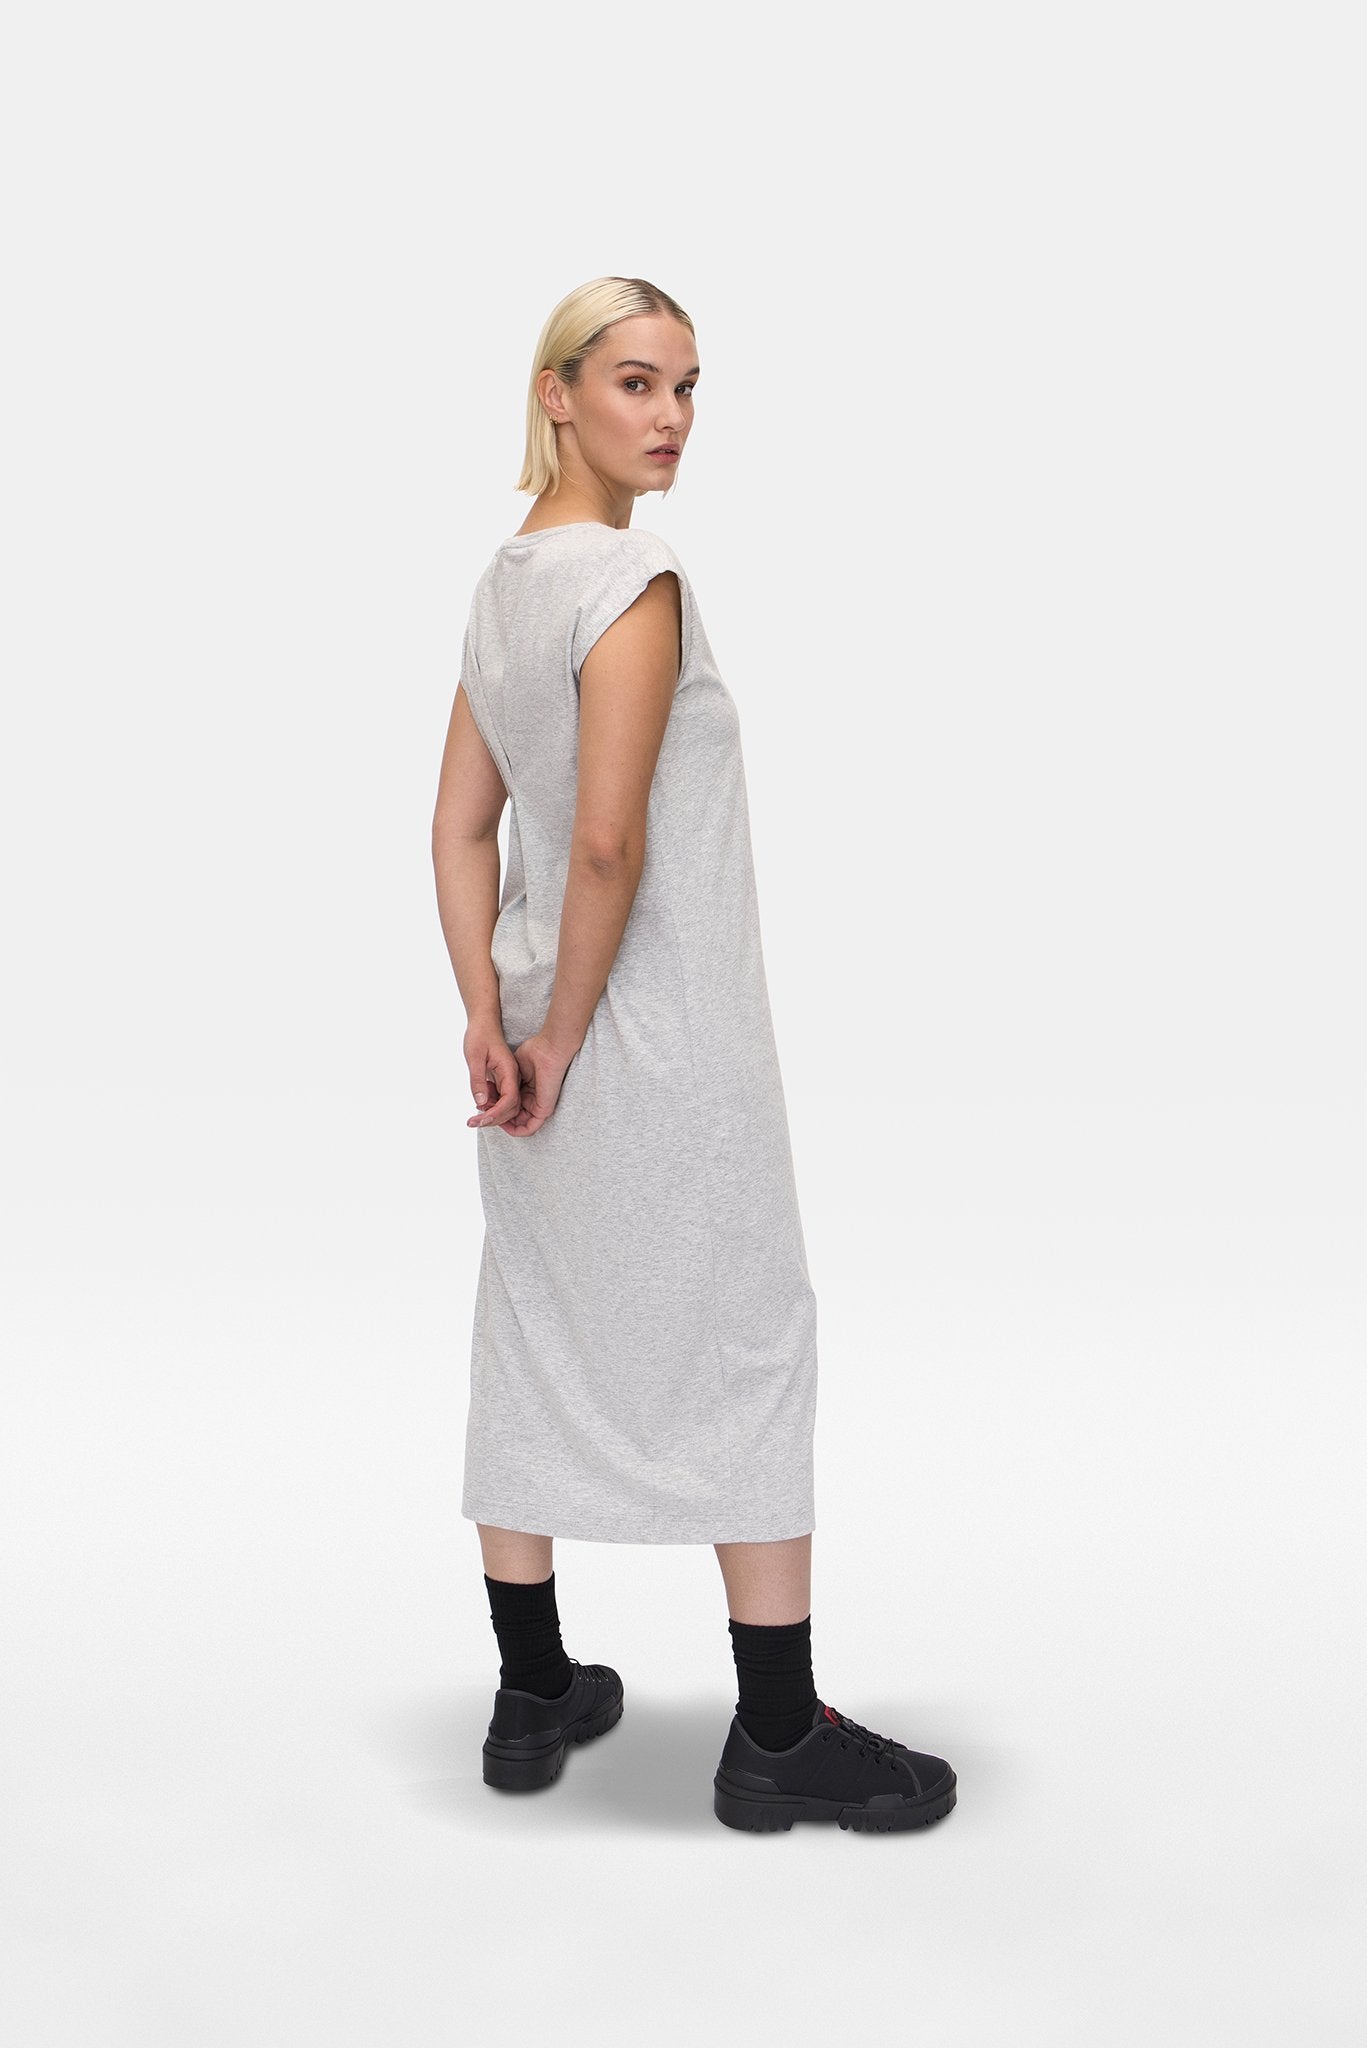 A.BCH A.07 Grey Marle T-Shirt Dress in Organic Cotton